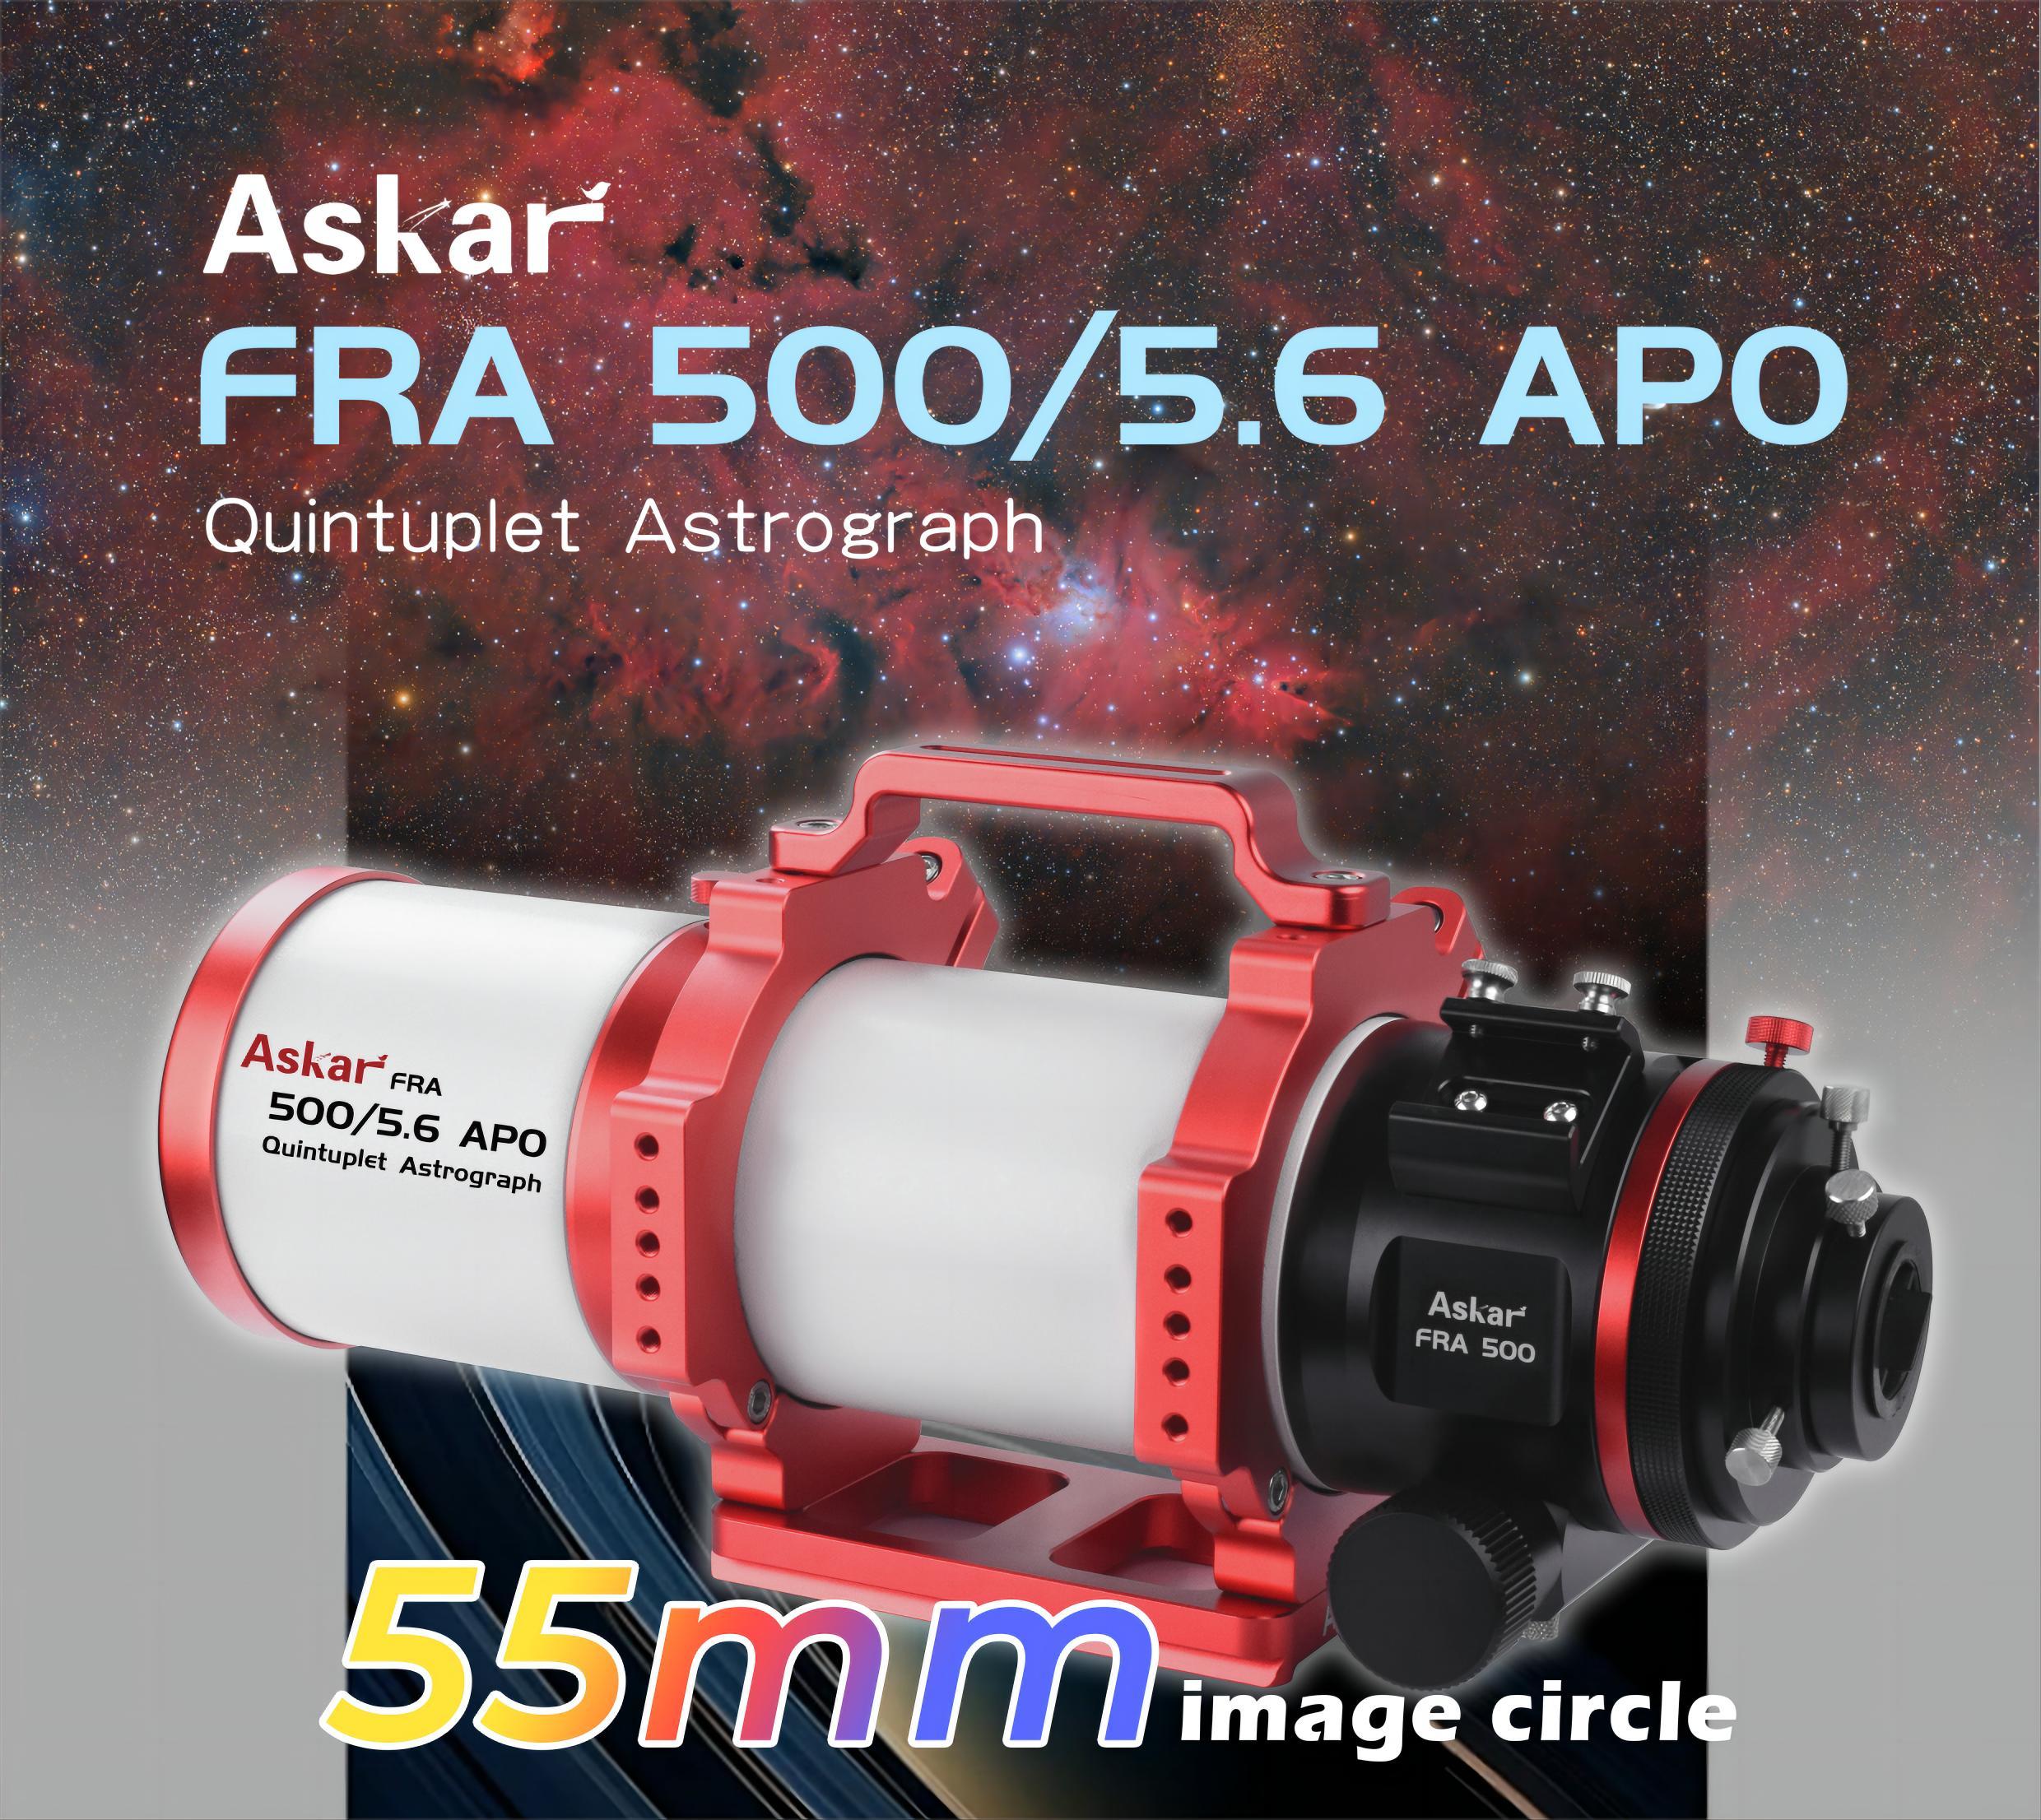 ASKAR FRA500 Returns! Aperture 90mm Focal length F5.6 Flat-field APO Astronomical Telescope! YOUTUBE Upload new promo video!